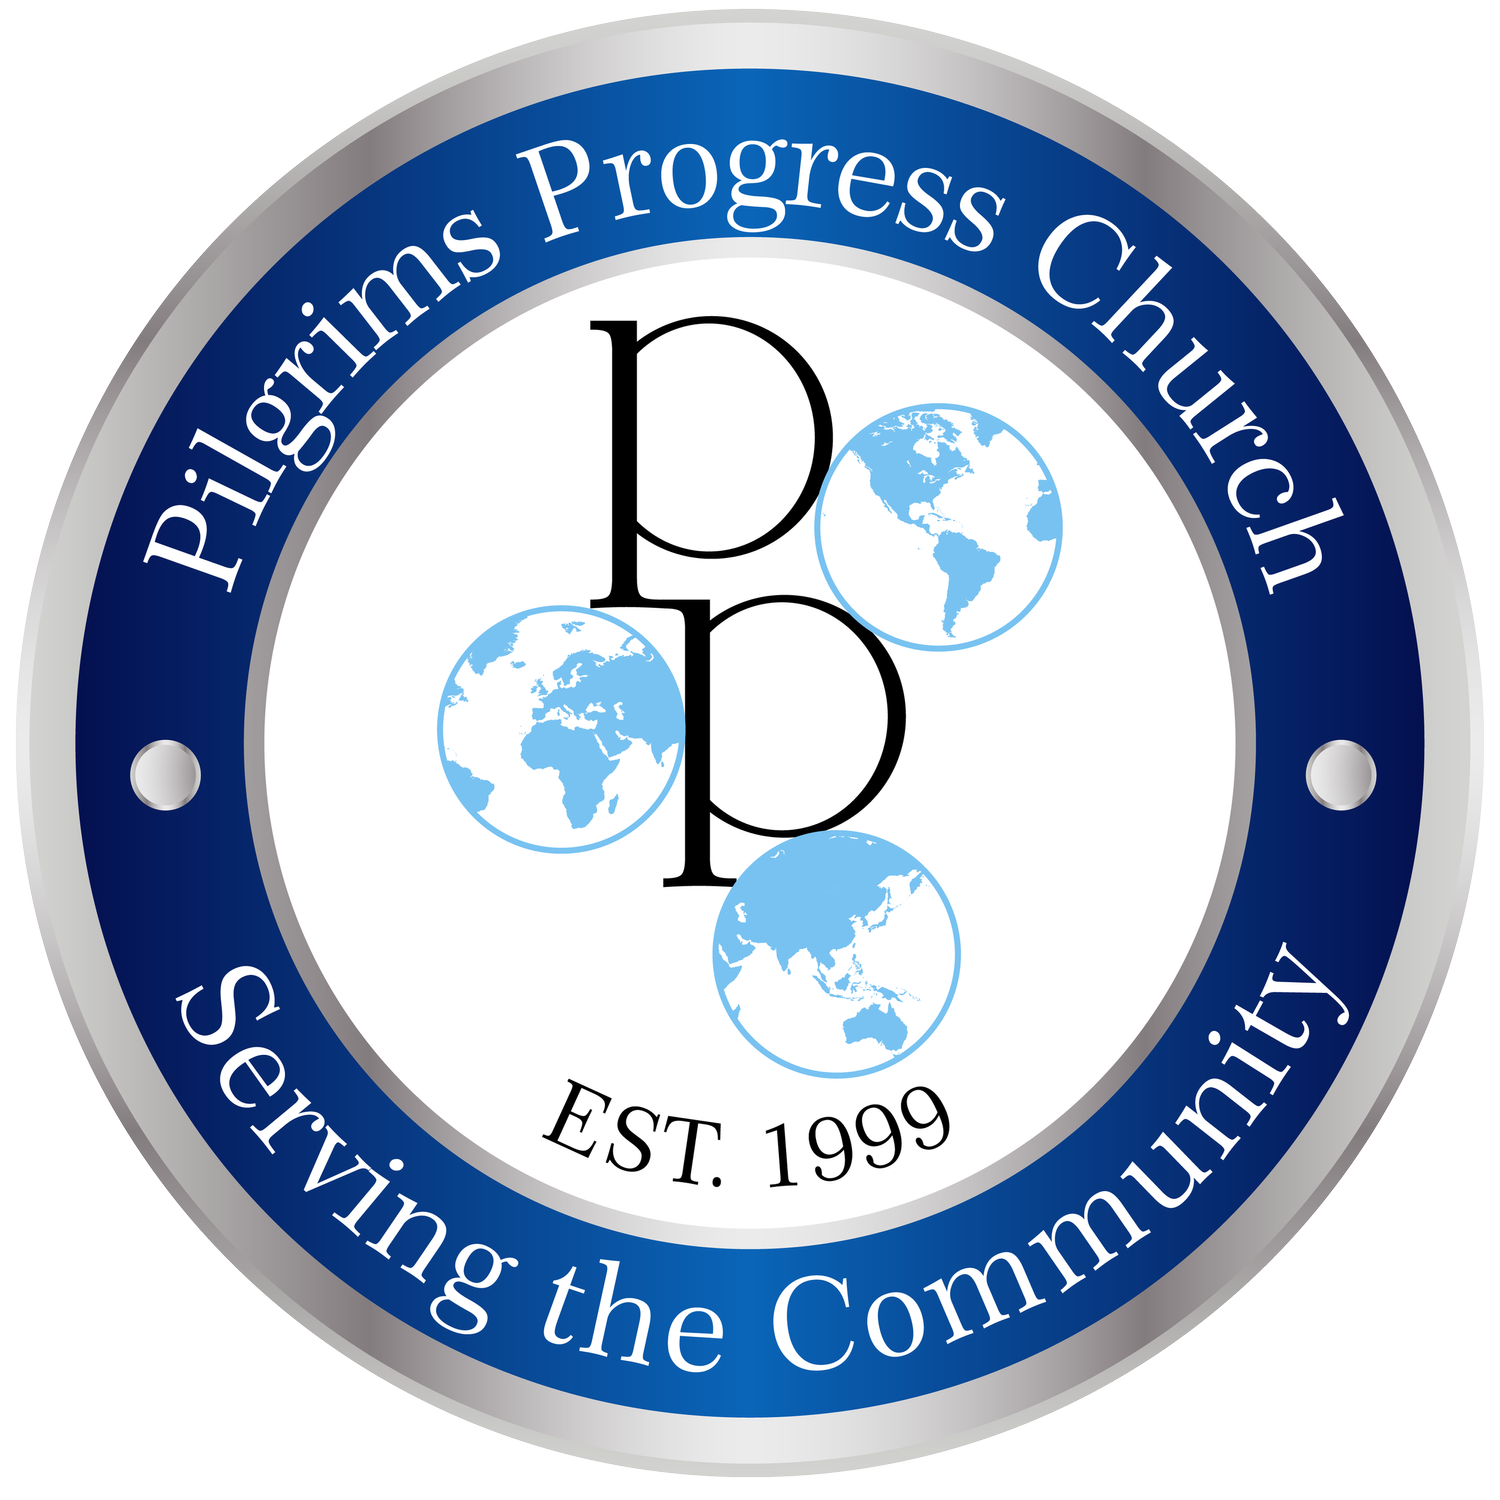 Pilgrims Progress Church | Serving the Community | Peoria, IL